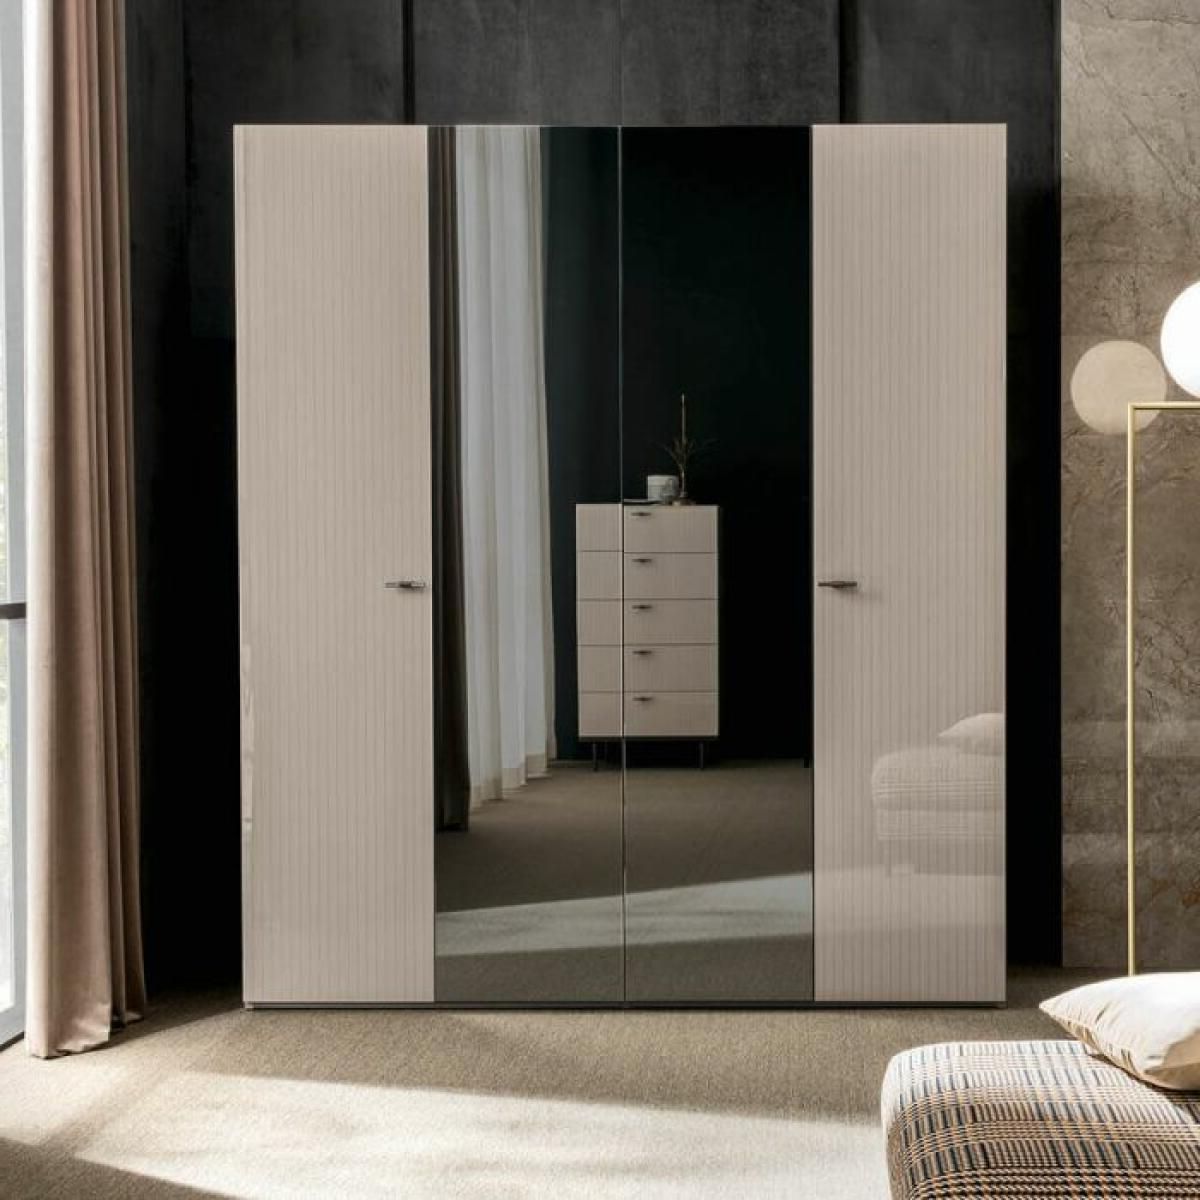 Claire 4 Door High Gloss Mirror Wardrobe – Bova Contemporary Furniture –  Dallas, Texas Modern Furniture Store In 4 Door Wardrobes With Mirror And Drawers (View 14 of 20)